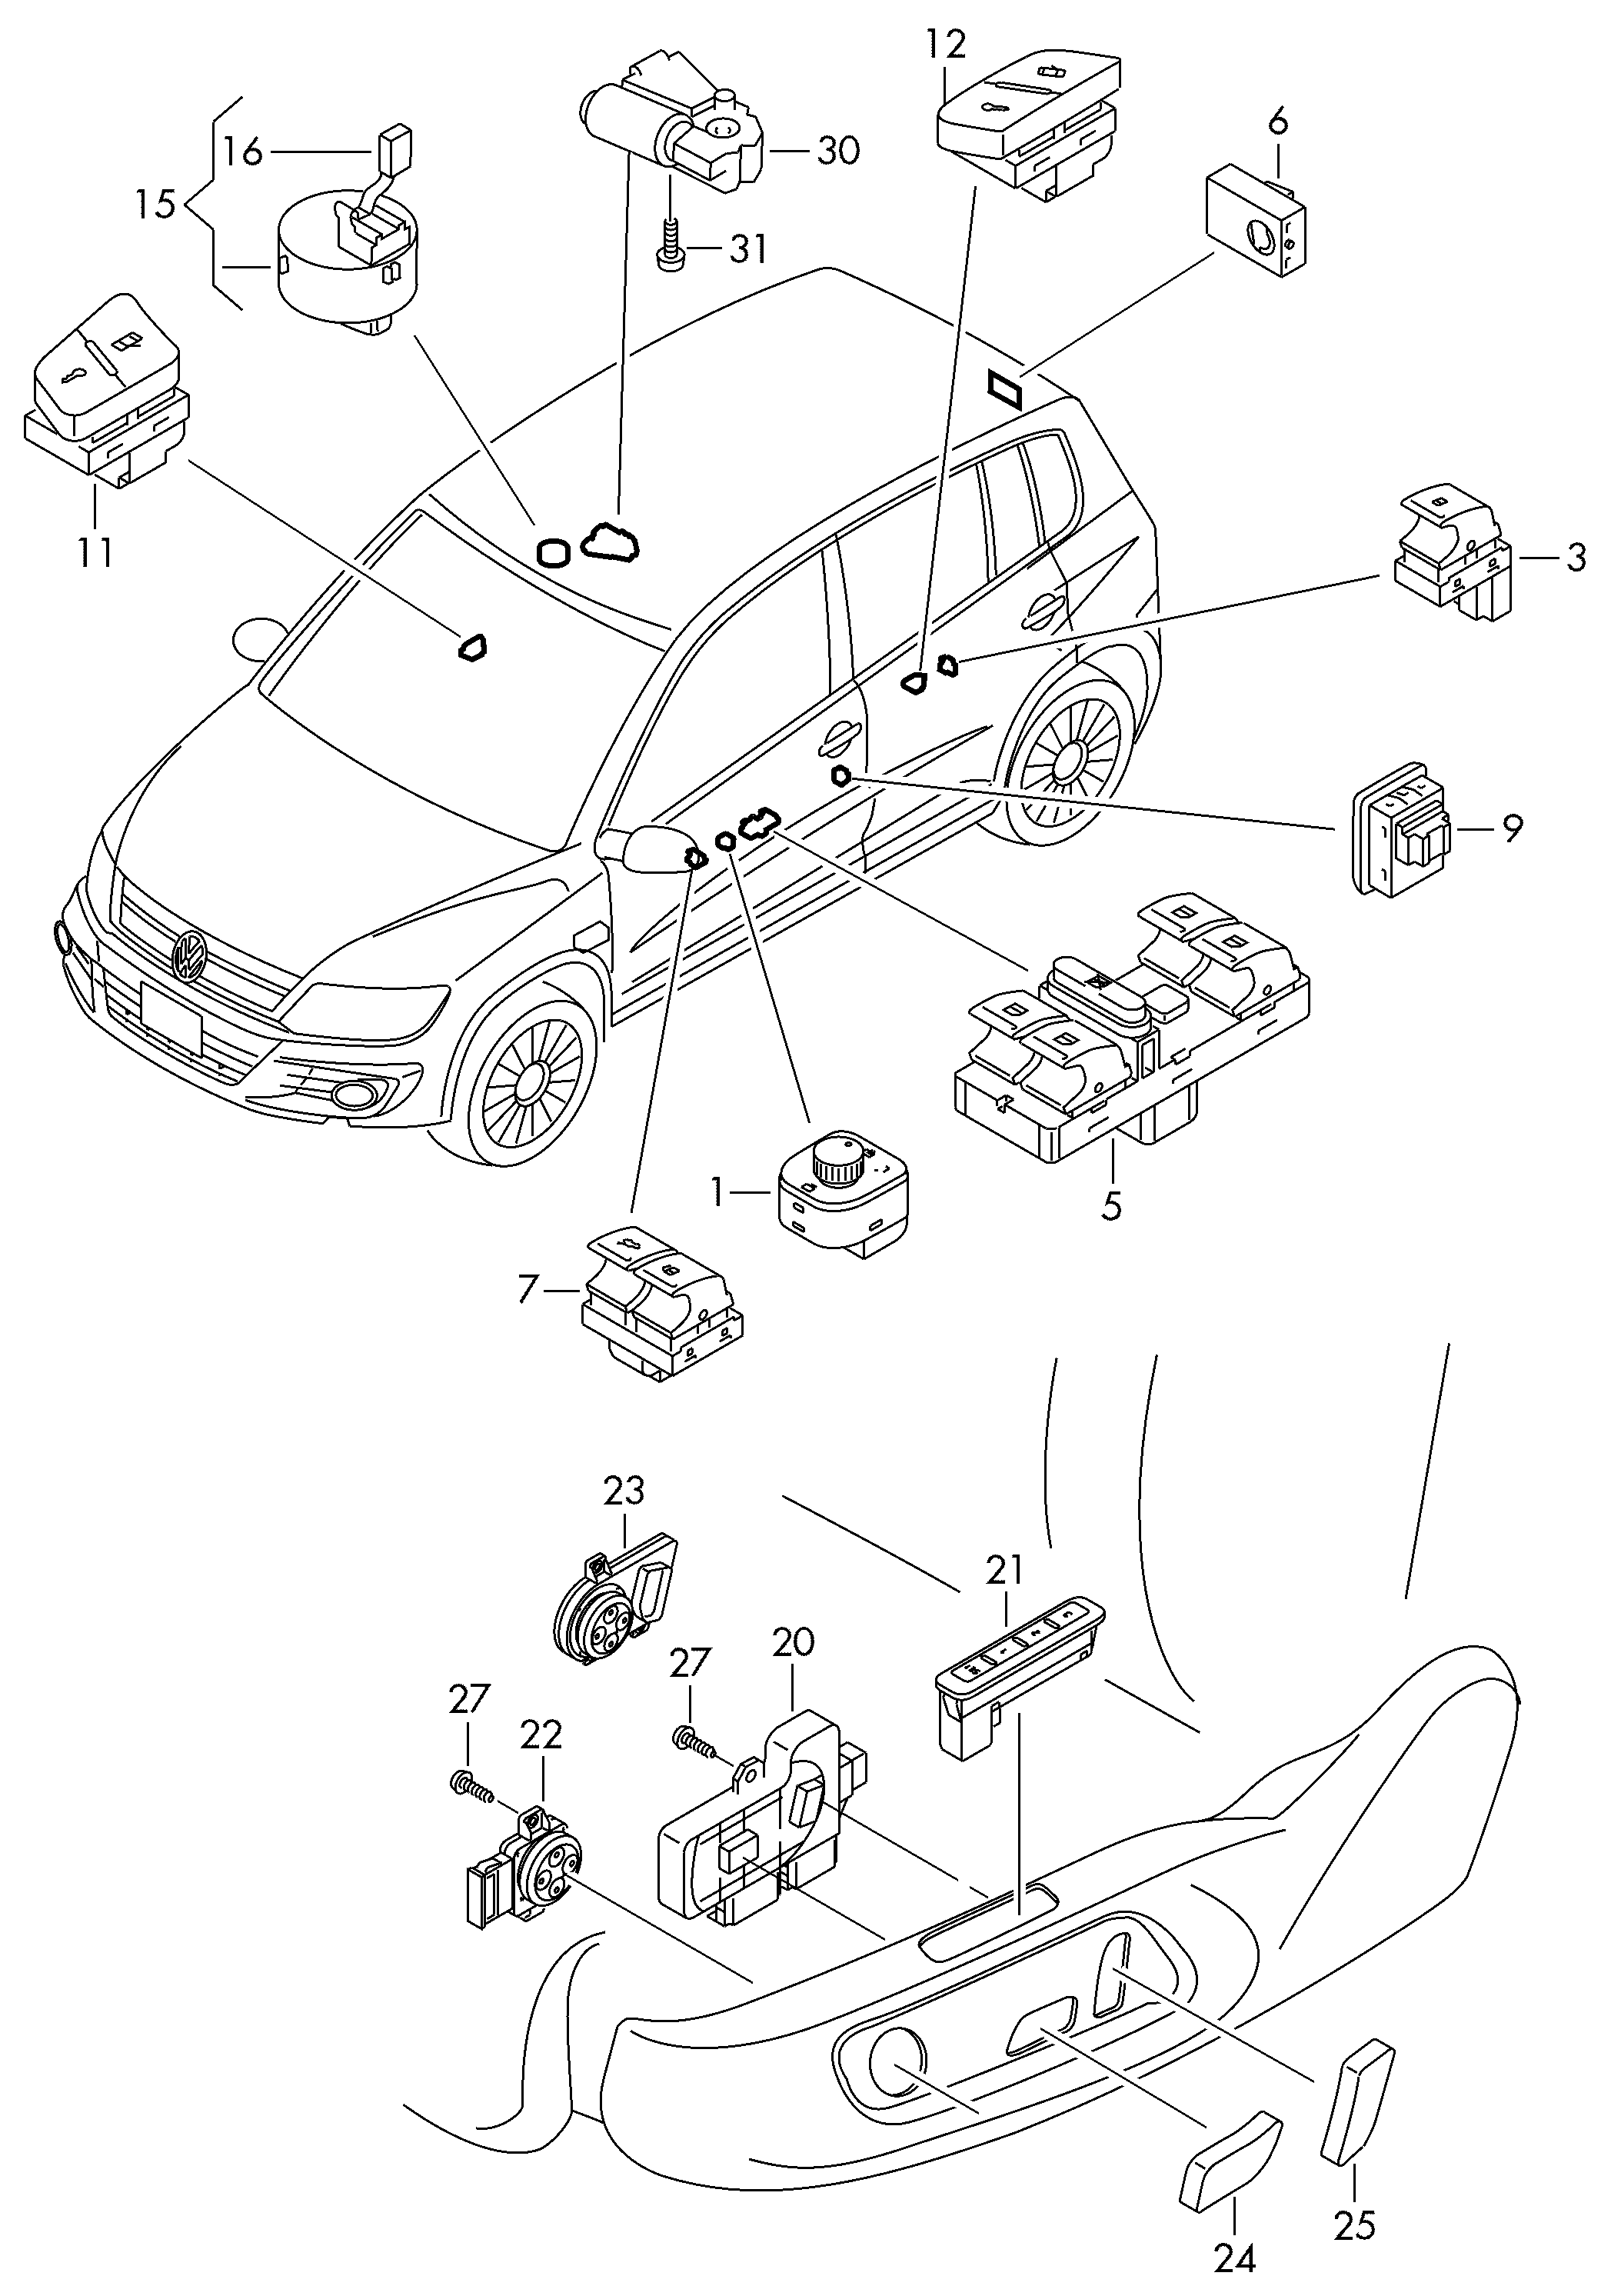 motor techo corredizo; conmutador en techo - Tiguan(TIG)  